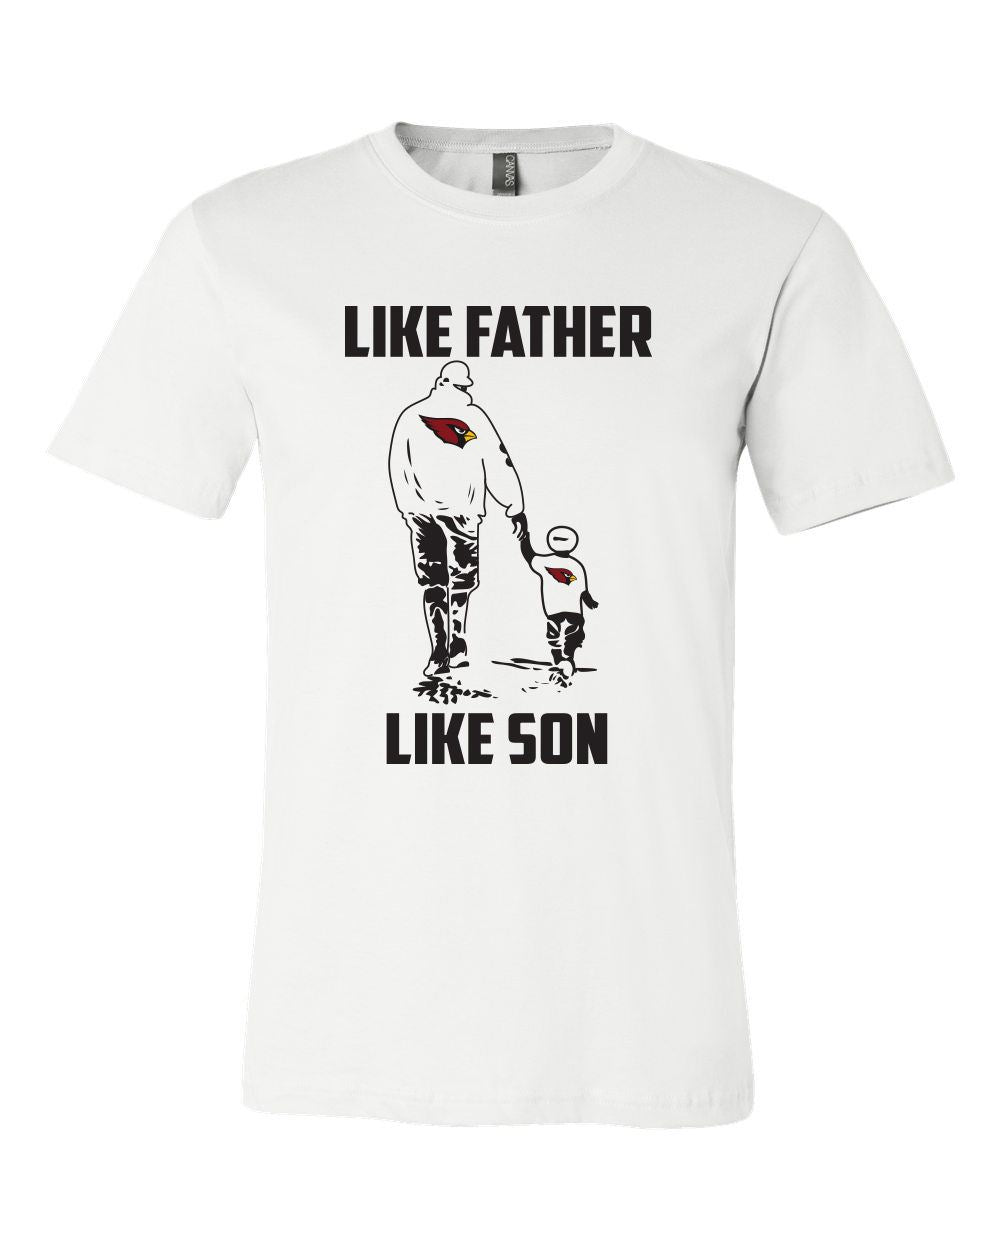 Arizona Cardinals Like Father like Son shirt Youth sizes available!